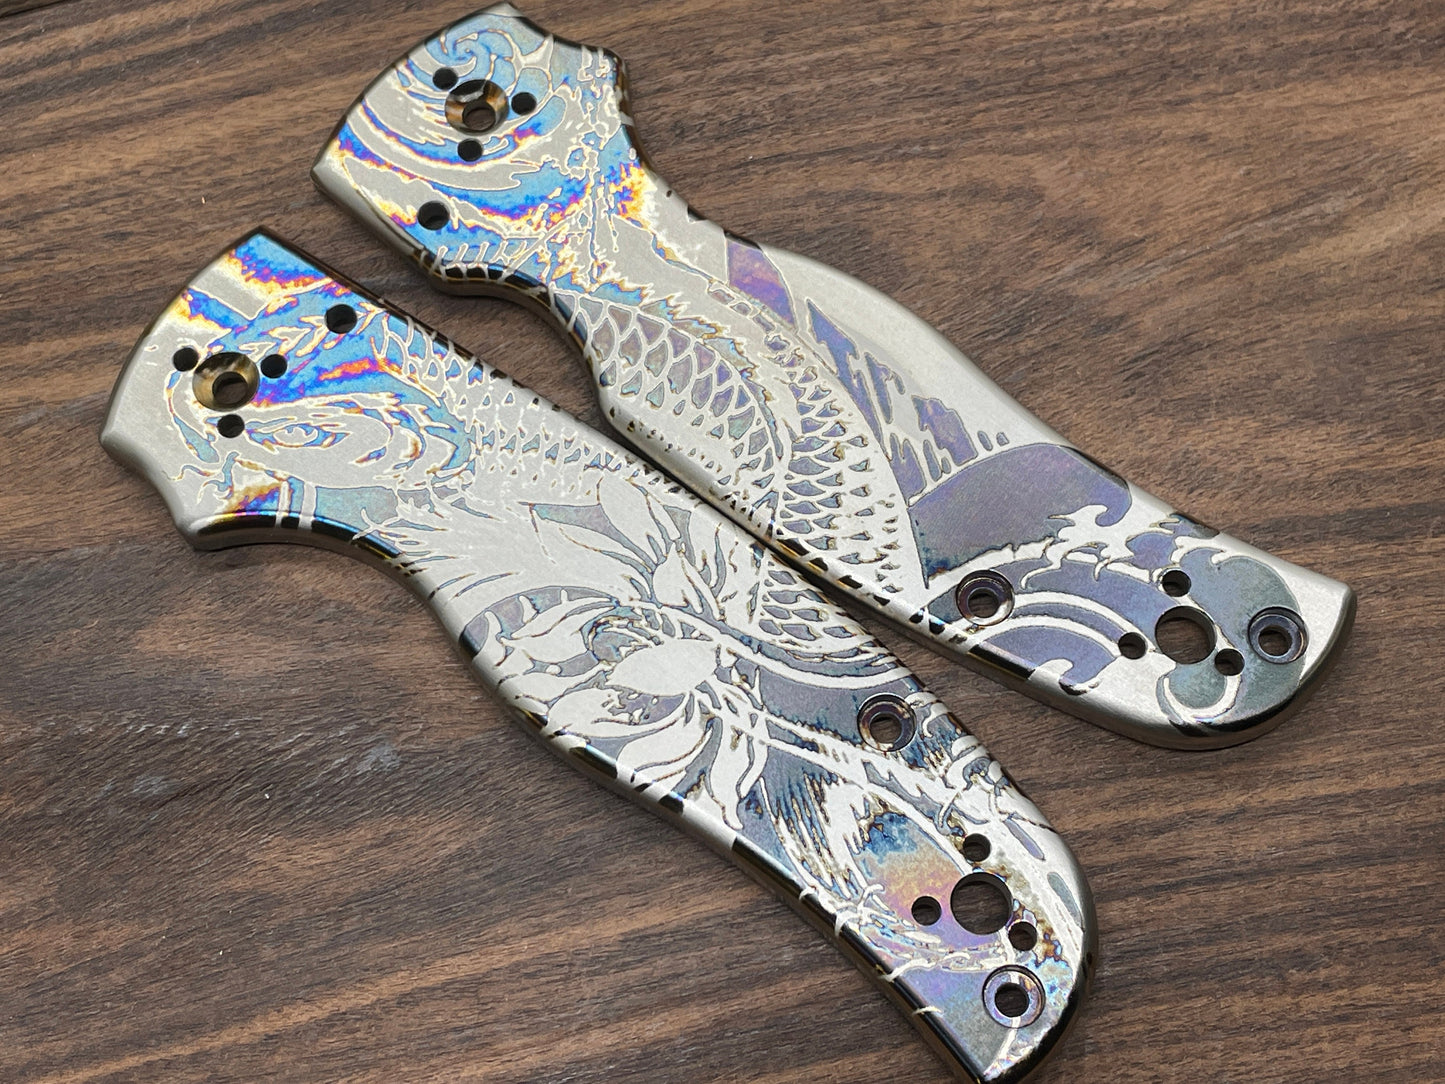 KOI Fish heat ano engraved Titanium Scales for SHAMAN Spyderco